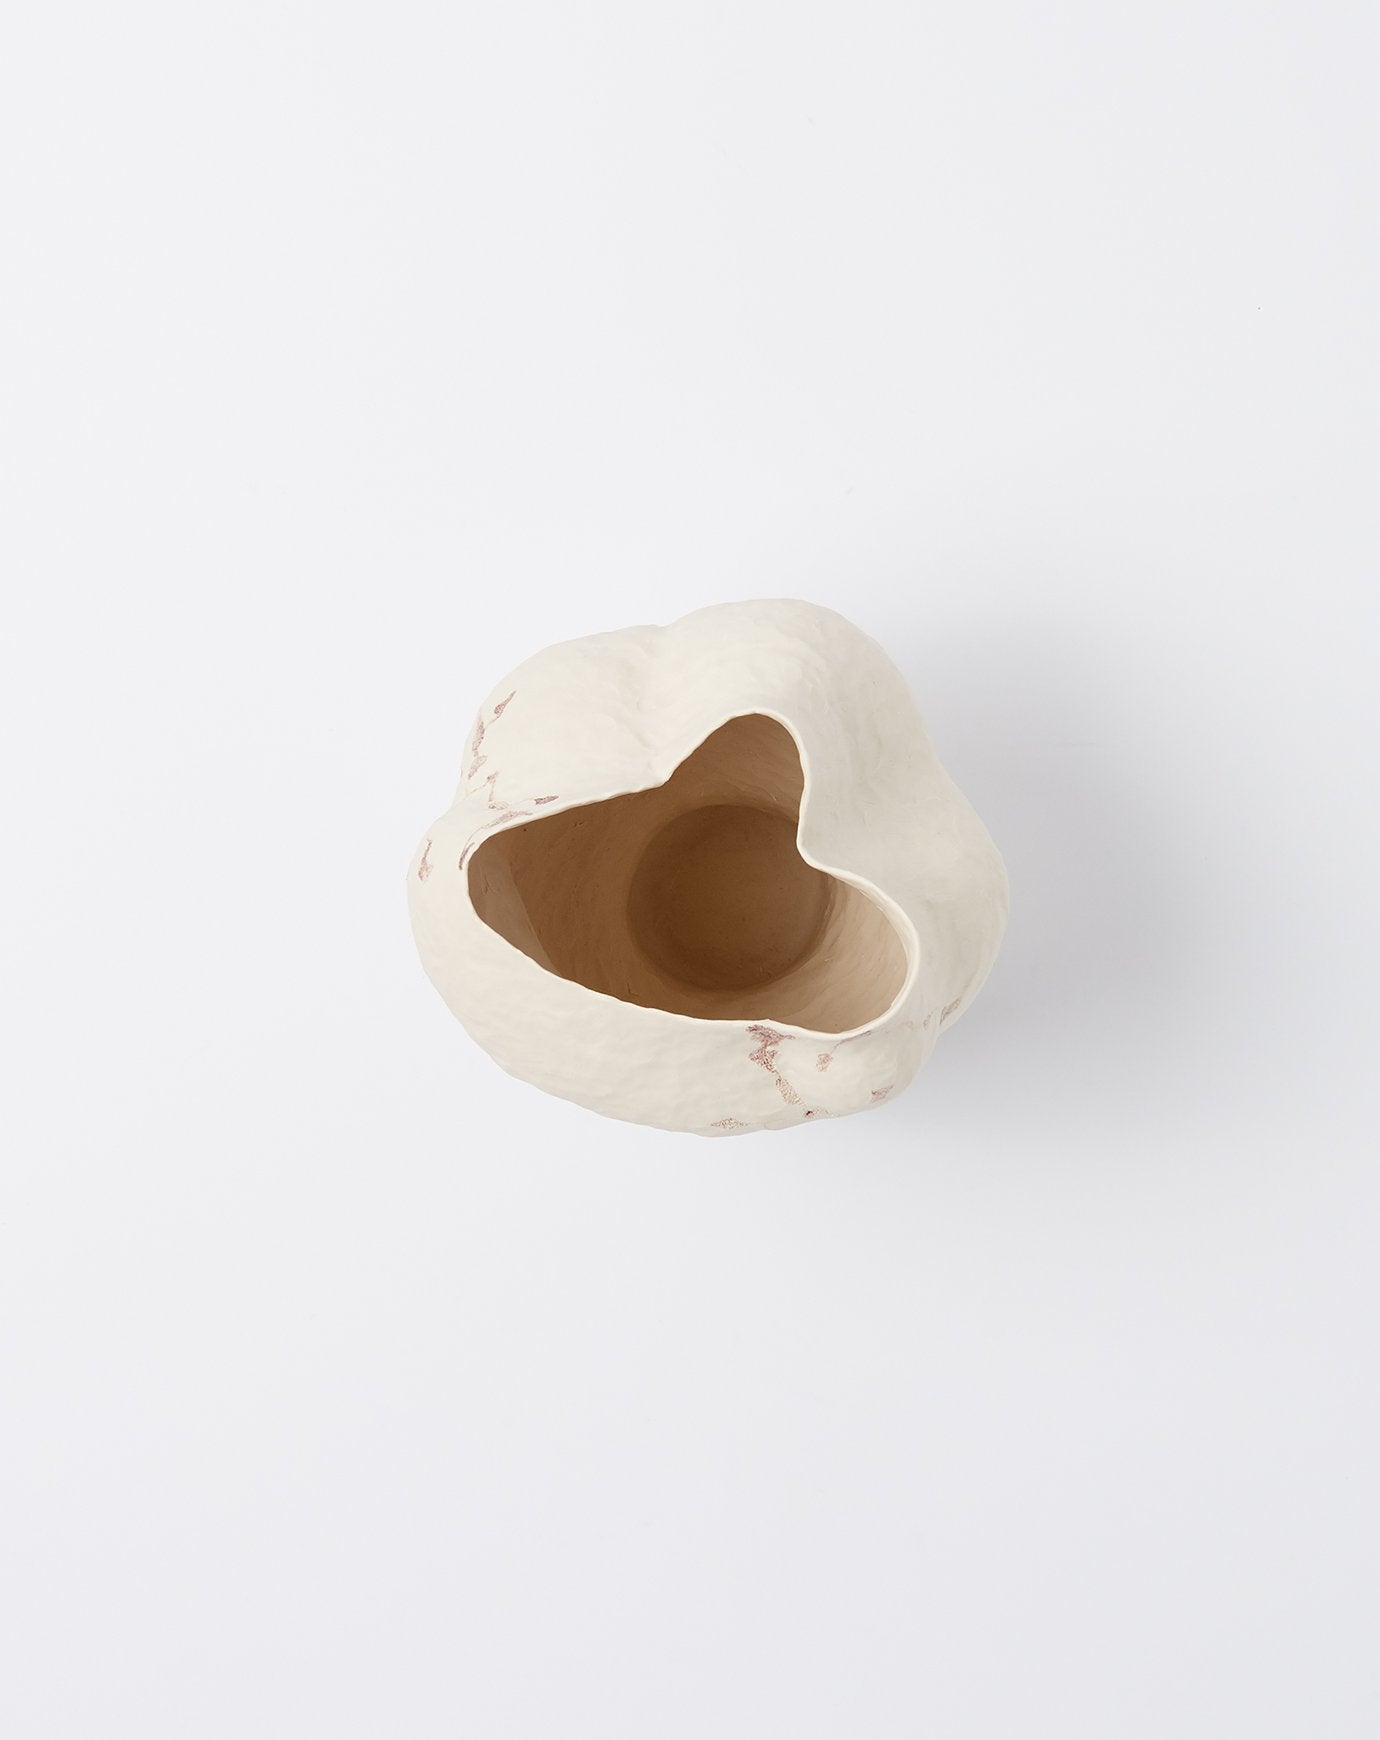 Lily Fein Gourd Vase